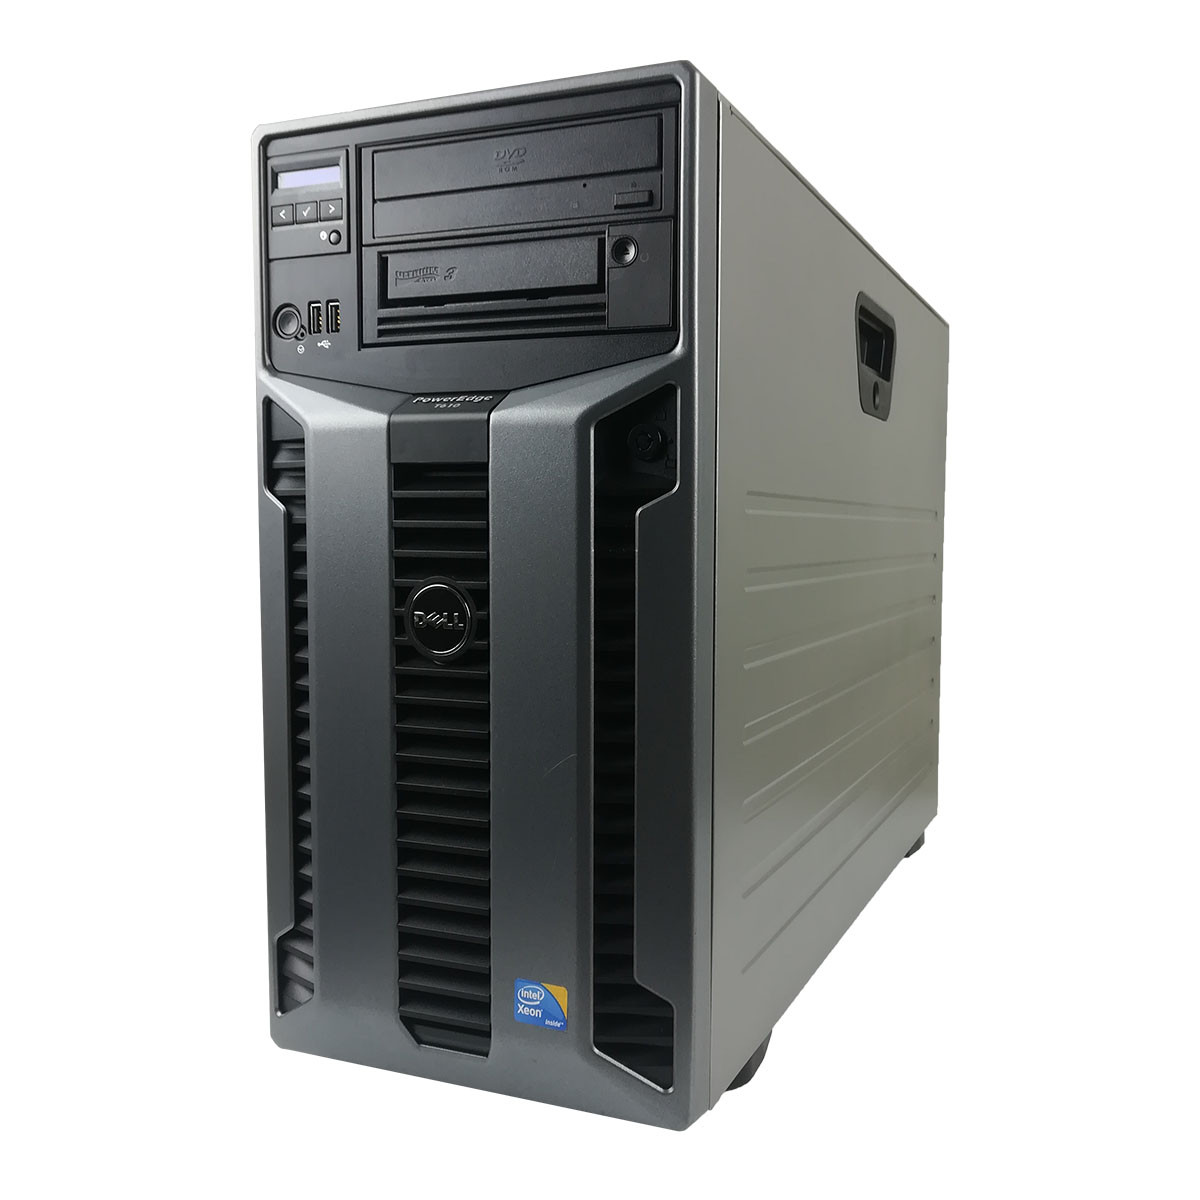 Server Dell PowerEdge T610 Tower, 2 x Intel Xeon Hexa Core X5650 2.66GHz - 3.06GHz, 48GB DDR3-ECC, Raid Perc 6i, 2 x 450GB SAS/15K + 4 x 2TB HDD SATA, DVD-ROM, Idrac 6 Enterprise, 2 PSU Hot Swap